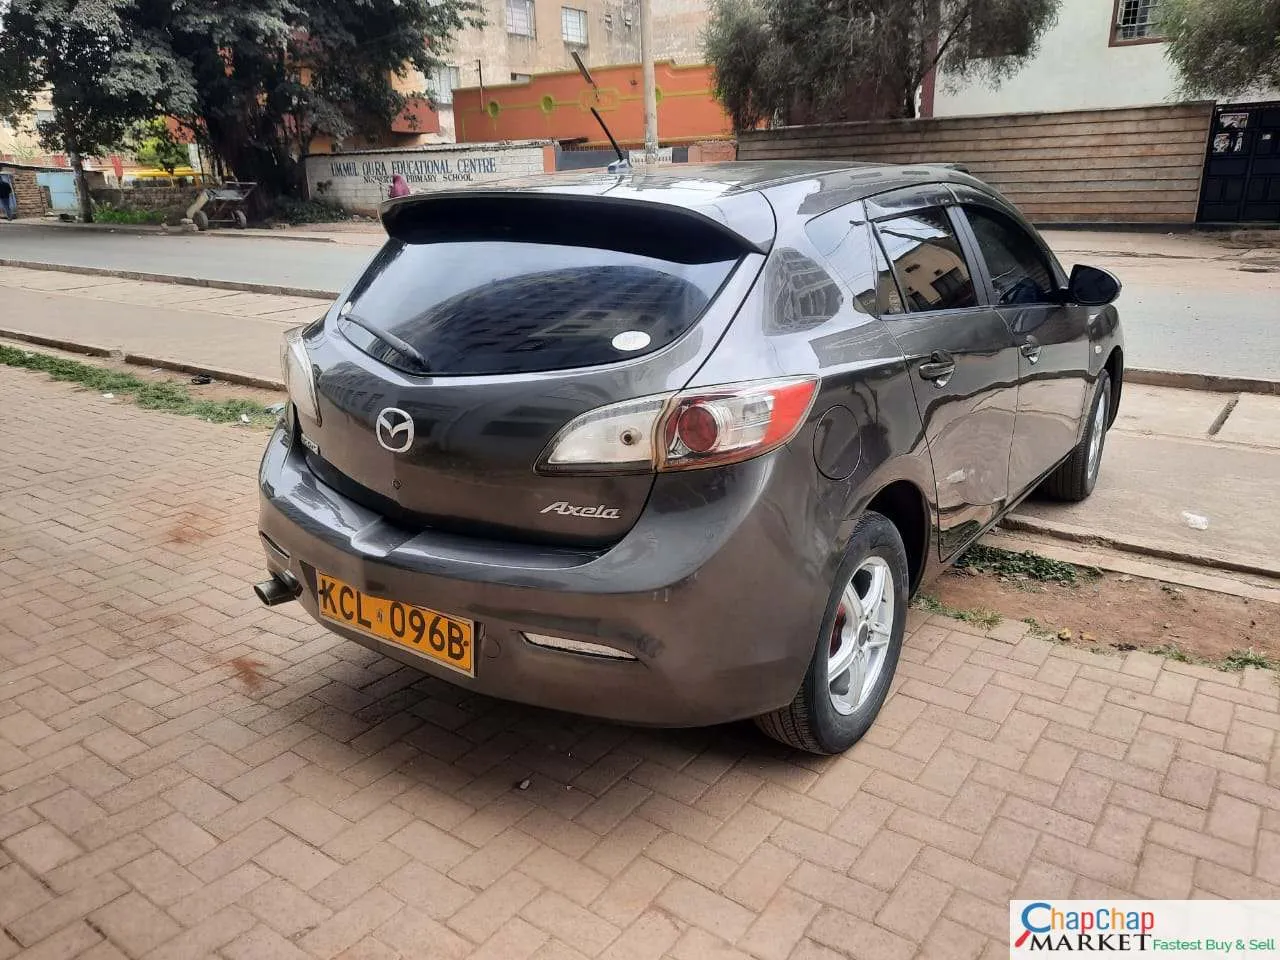 Mazda AXELA For sale in Kenya 🔥 You Pay 30% DEPOSIT BANK FINANCE installments